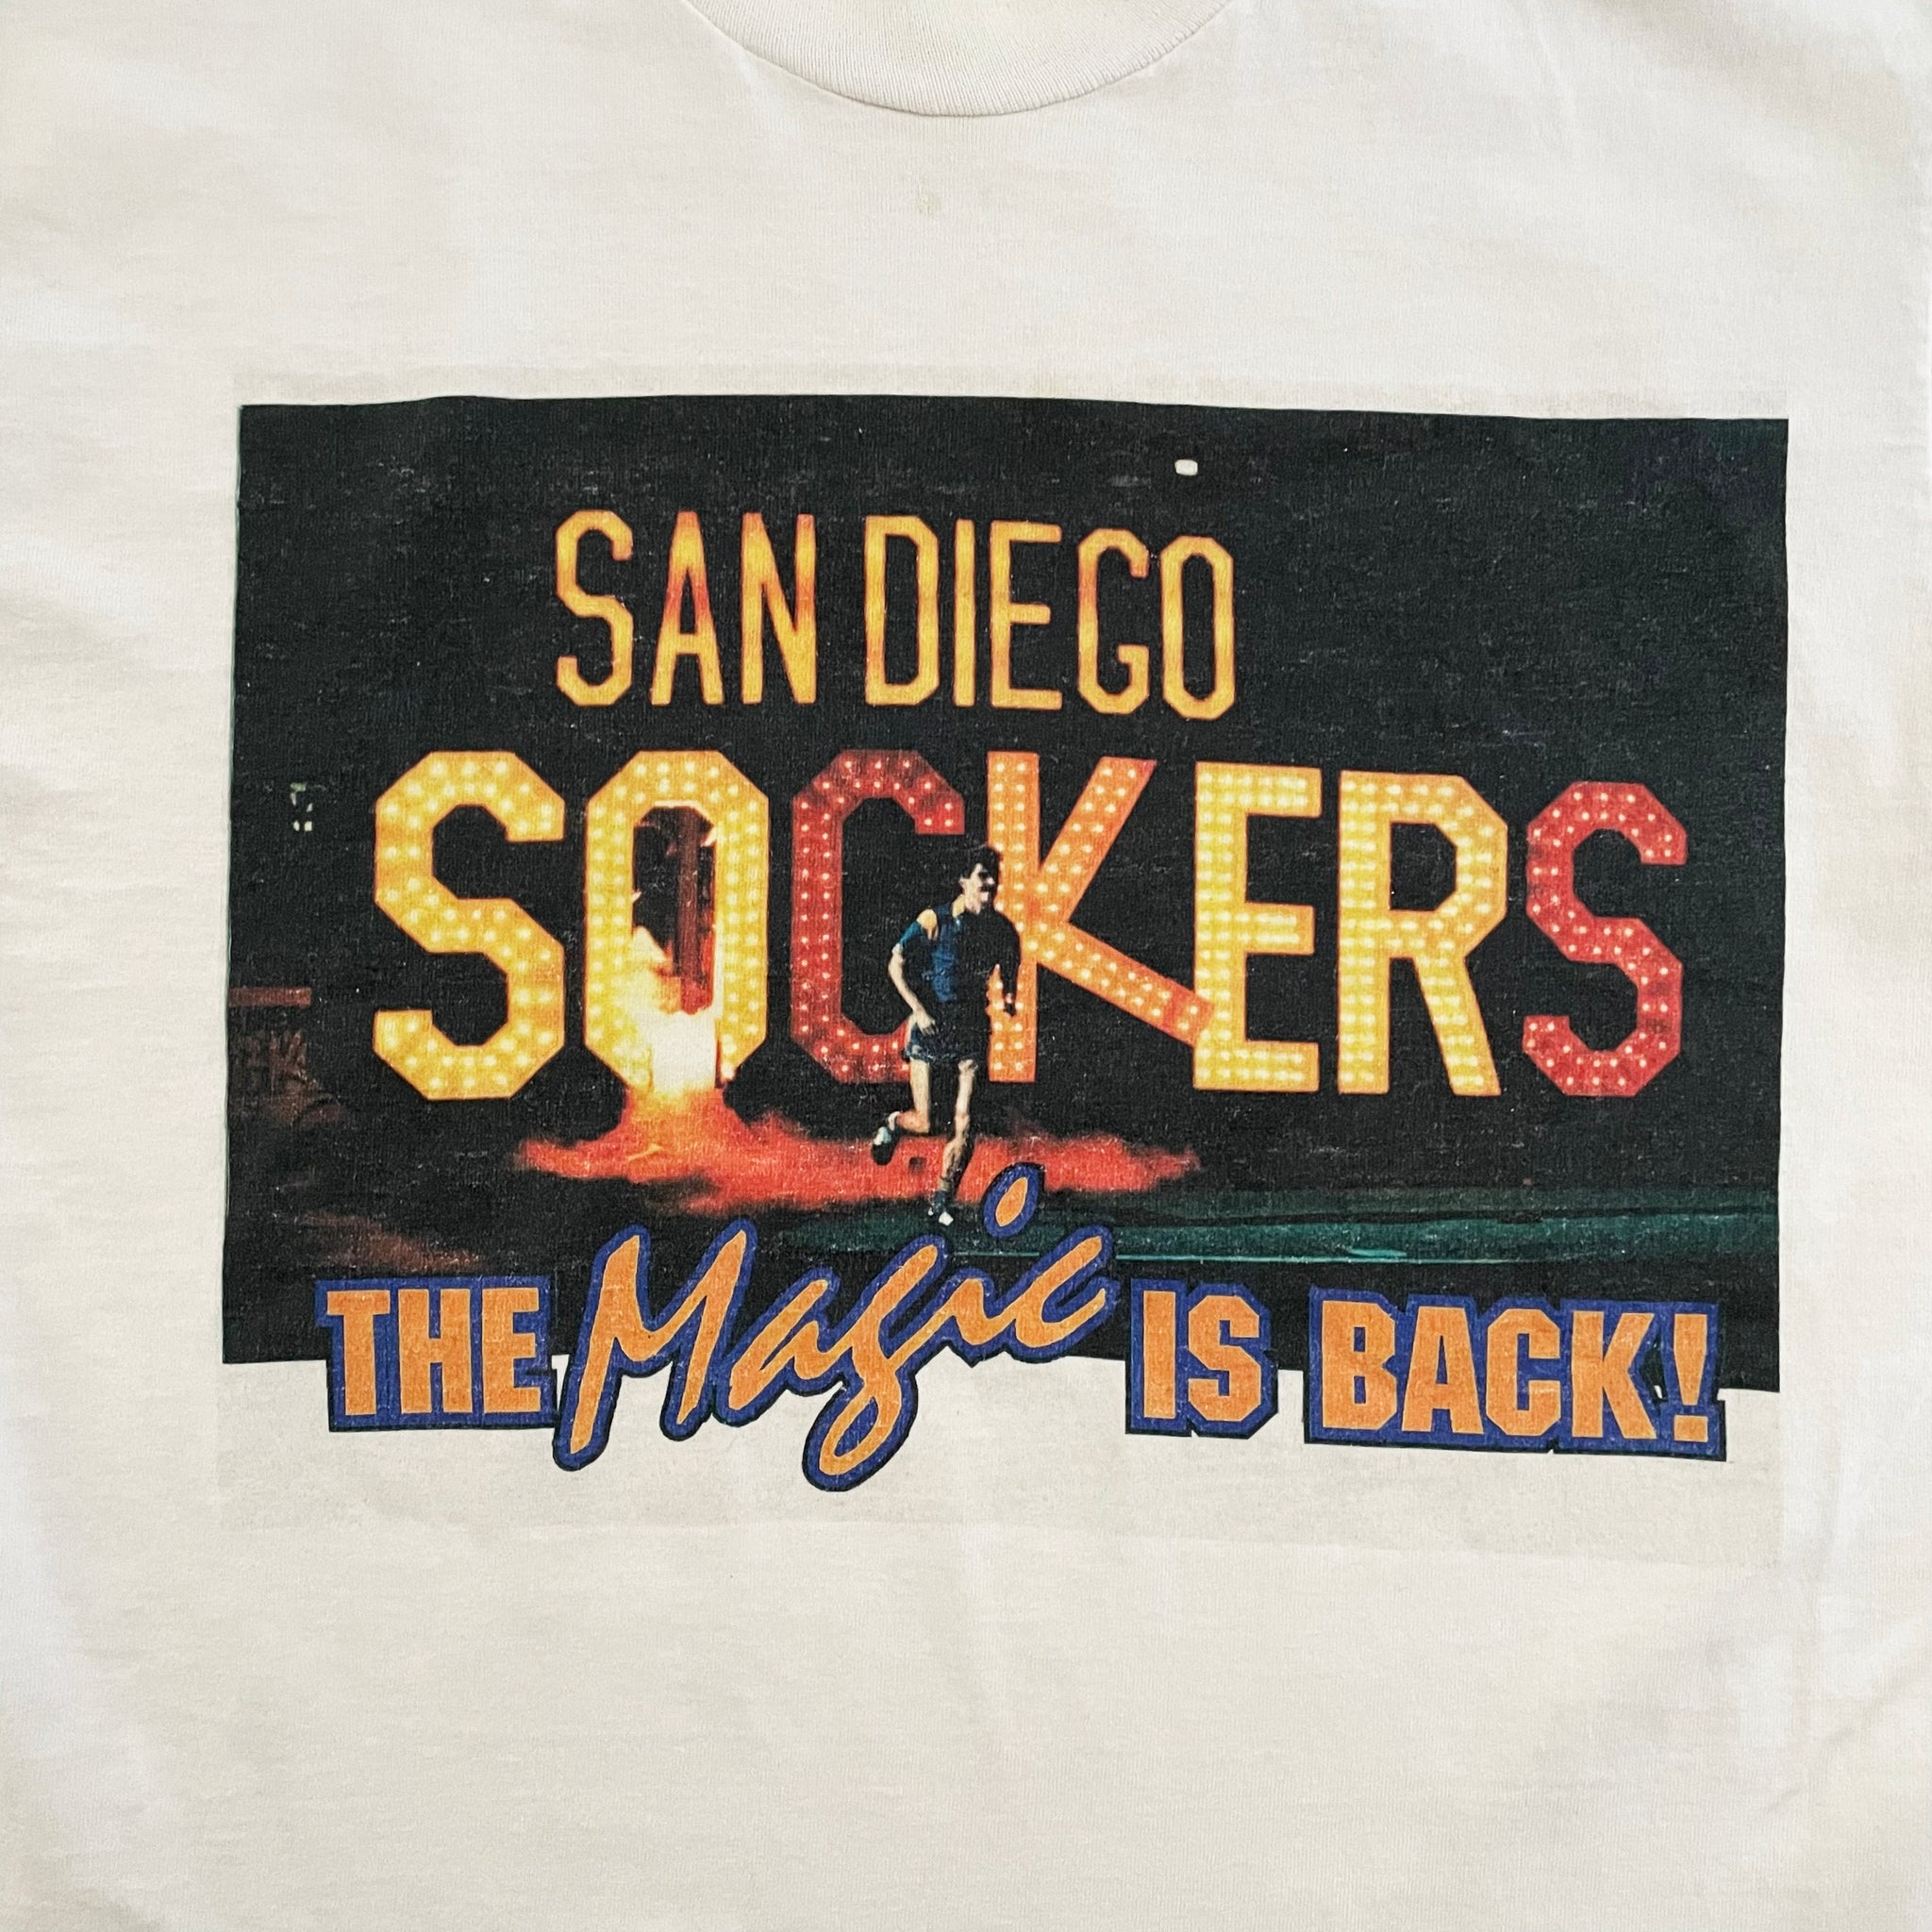 San Diego Sockers T-Shirt - M